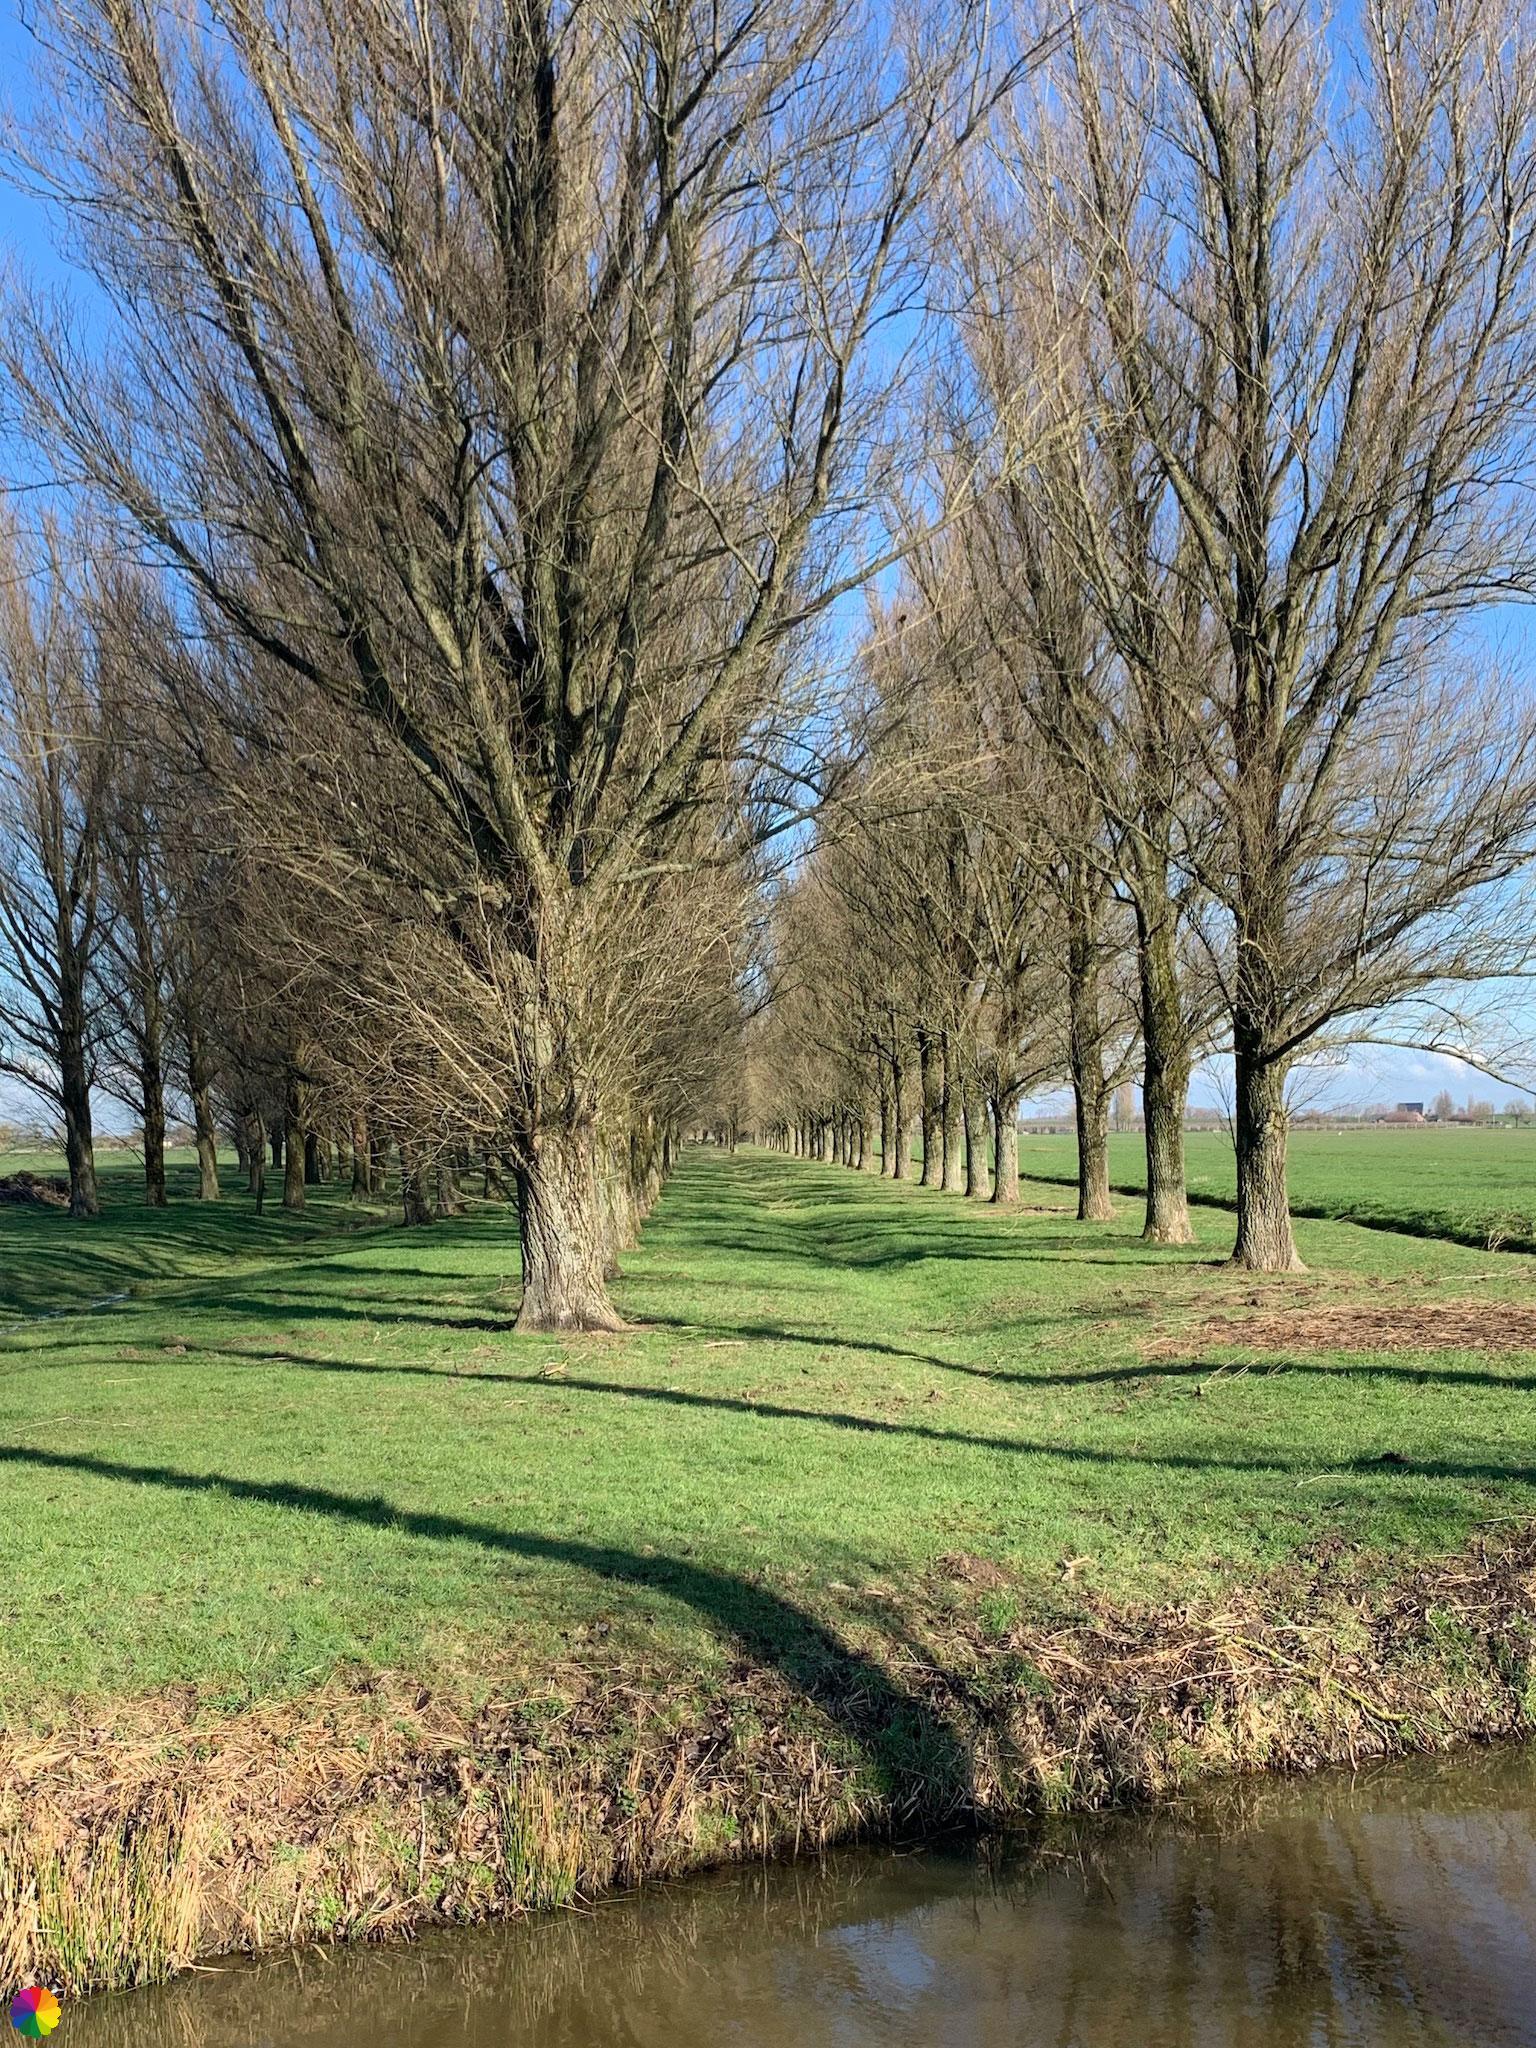 A row of tall trees